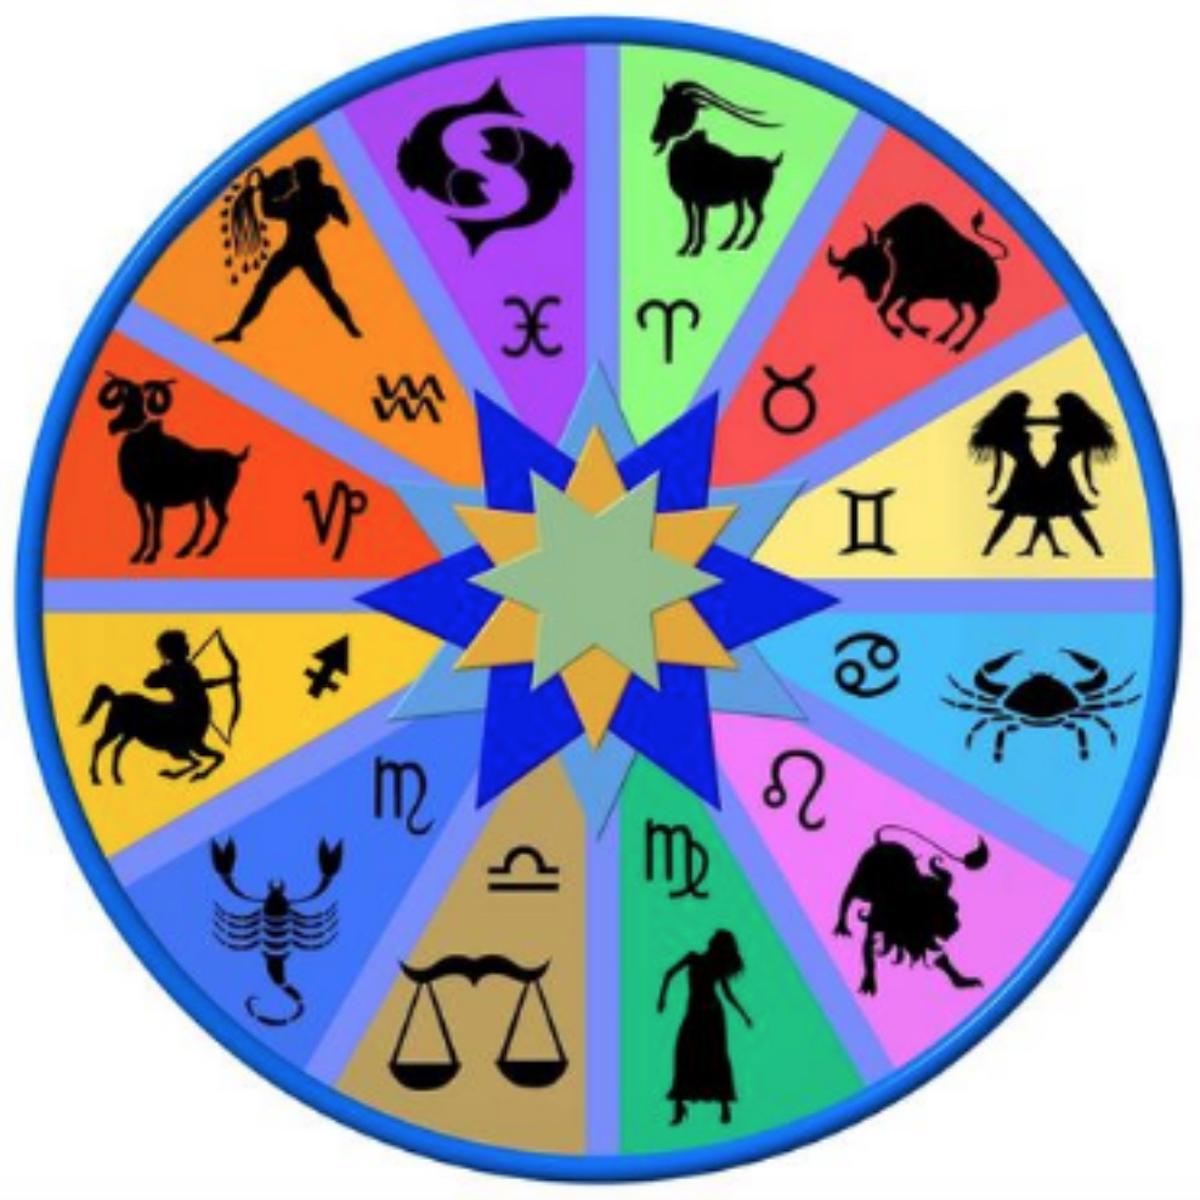 "Greek origin of the 12 zodiac signs" graphic courtesy Horoscopius